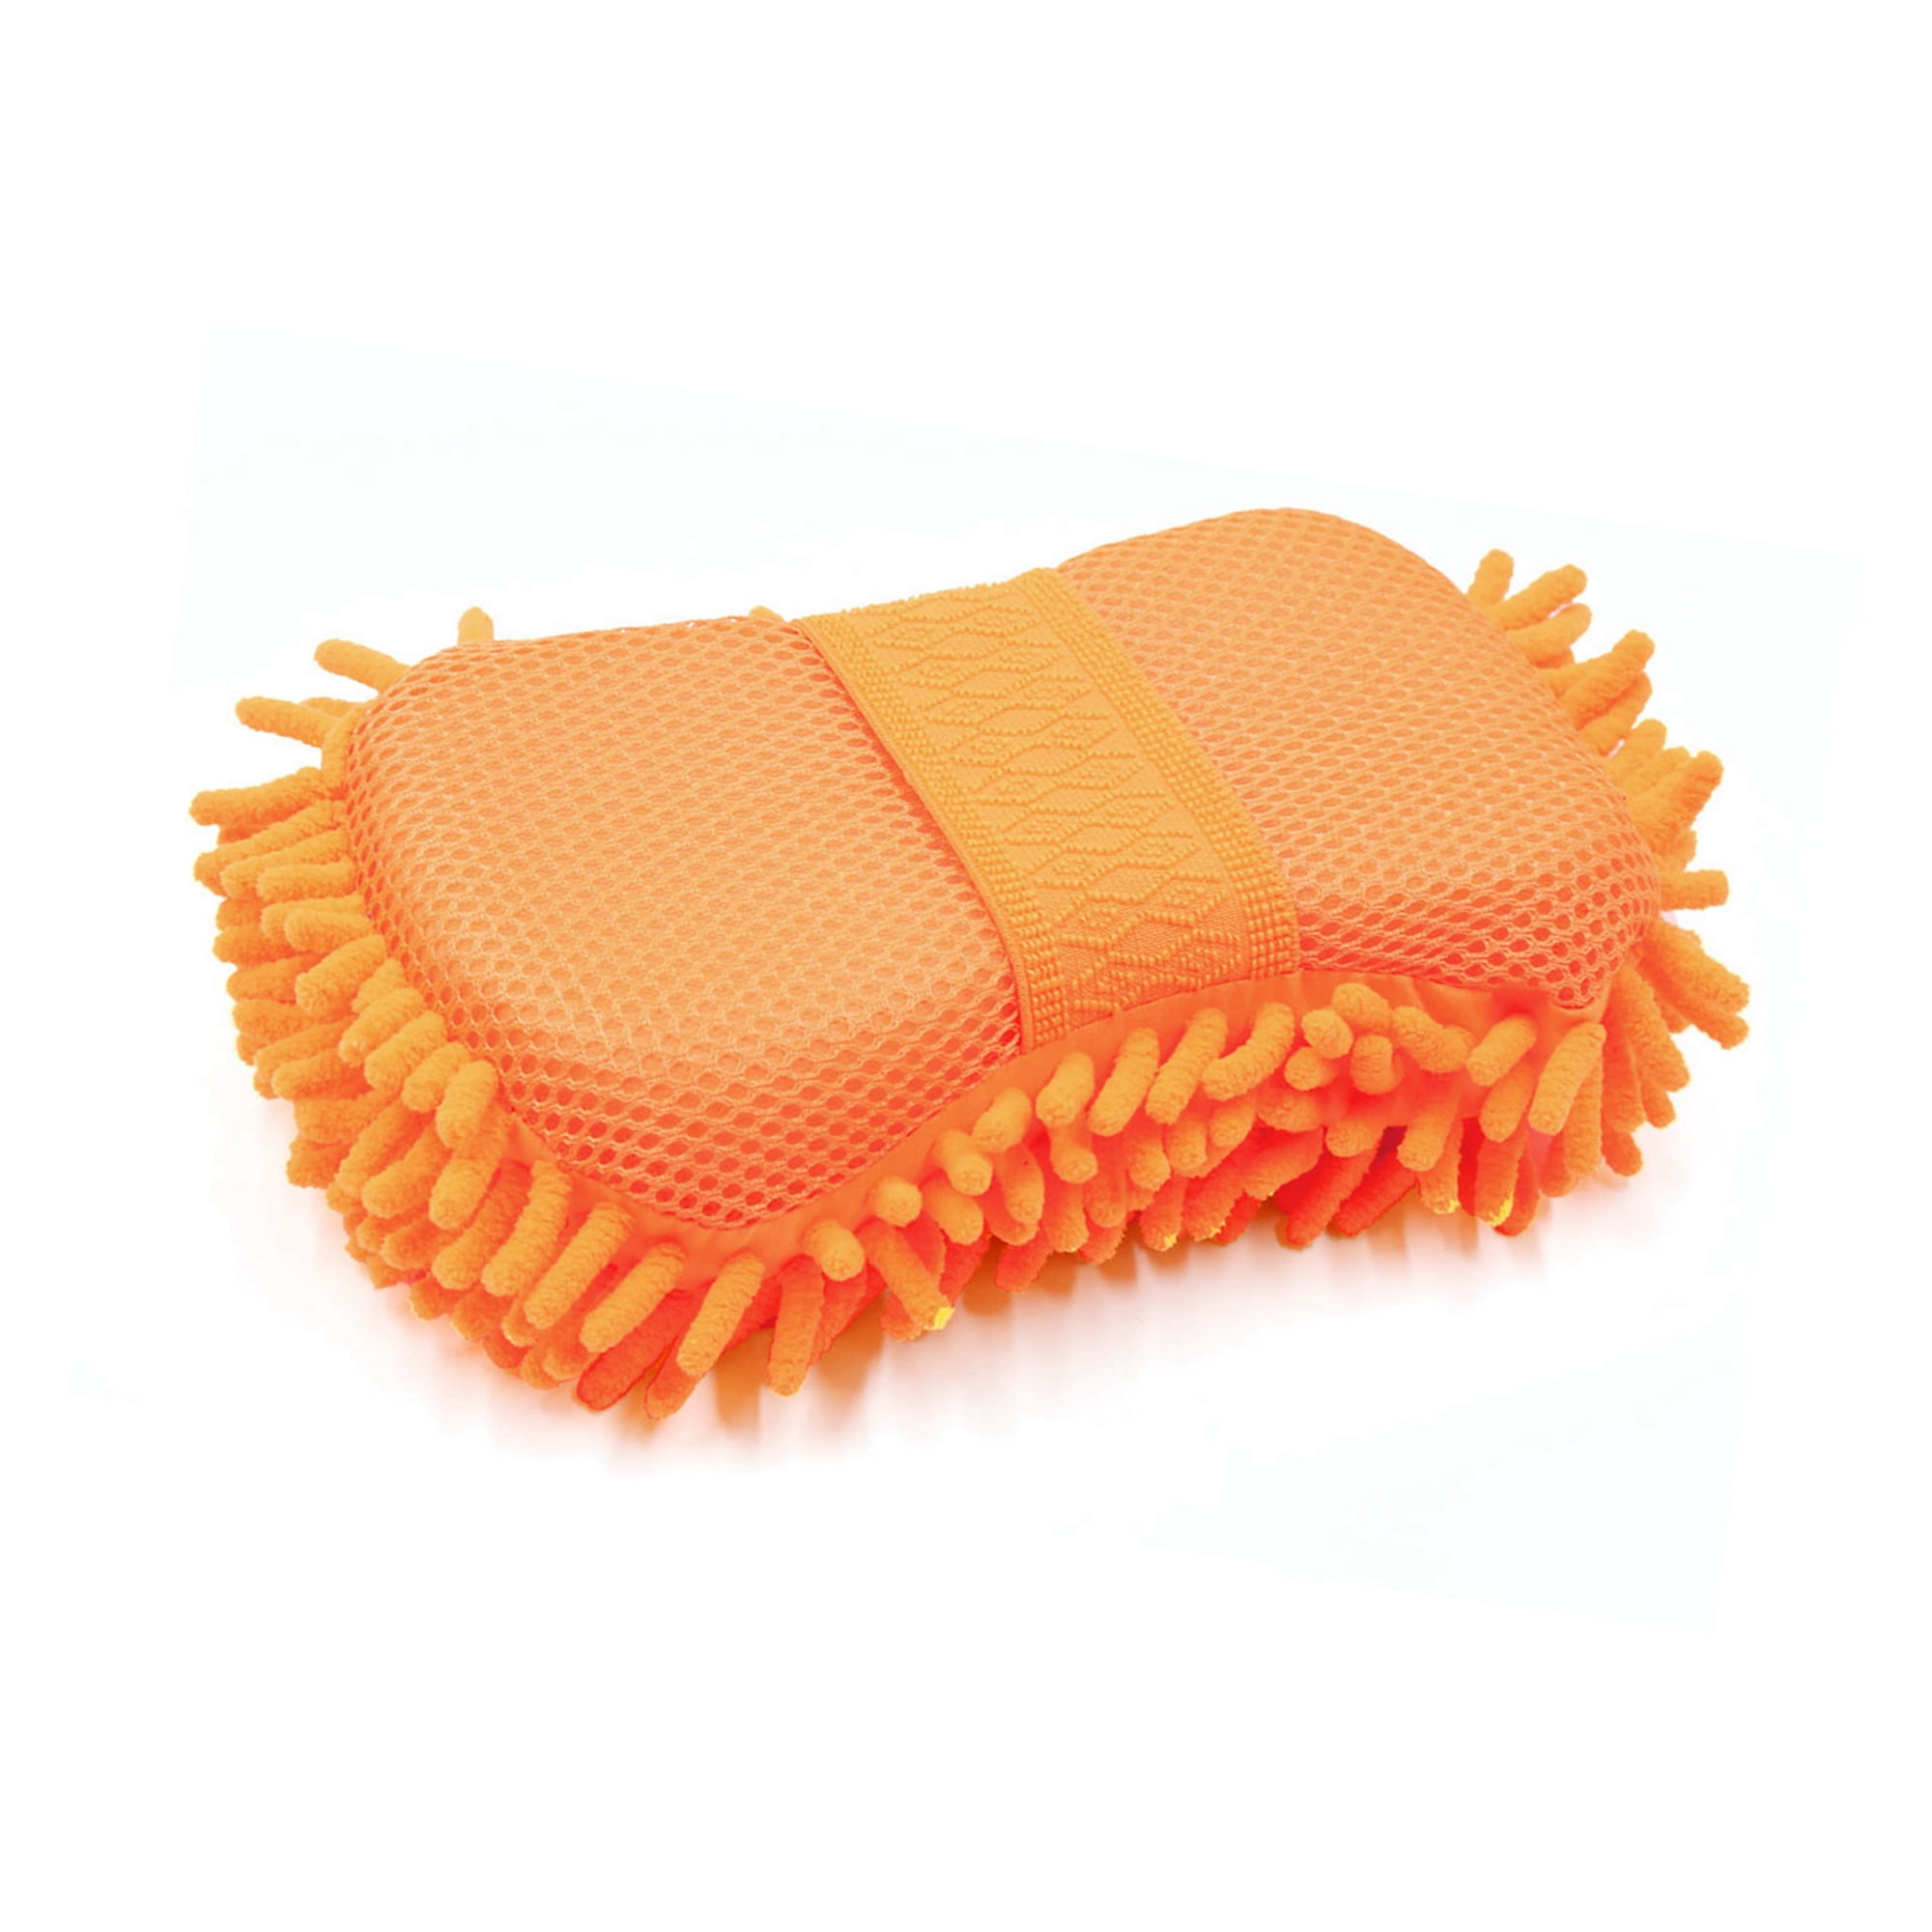 Leke Huge waxing car wash sponge wipe car sponge block car cleaning beauty  supplies